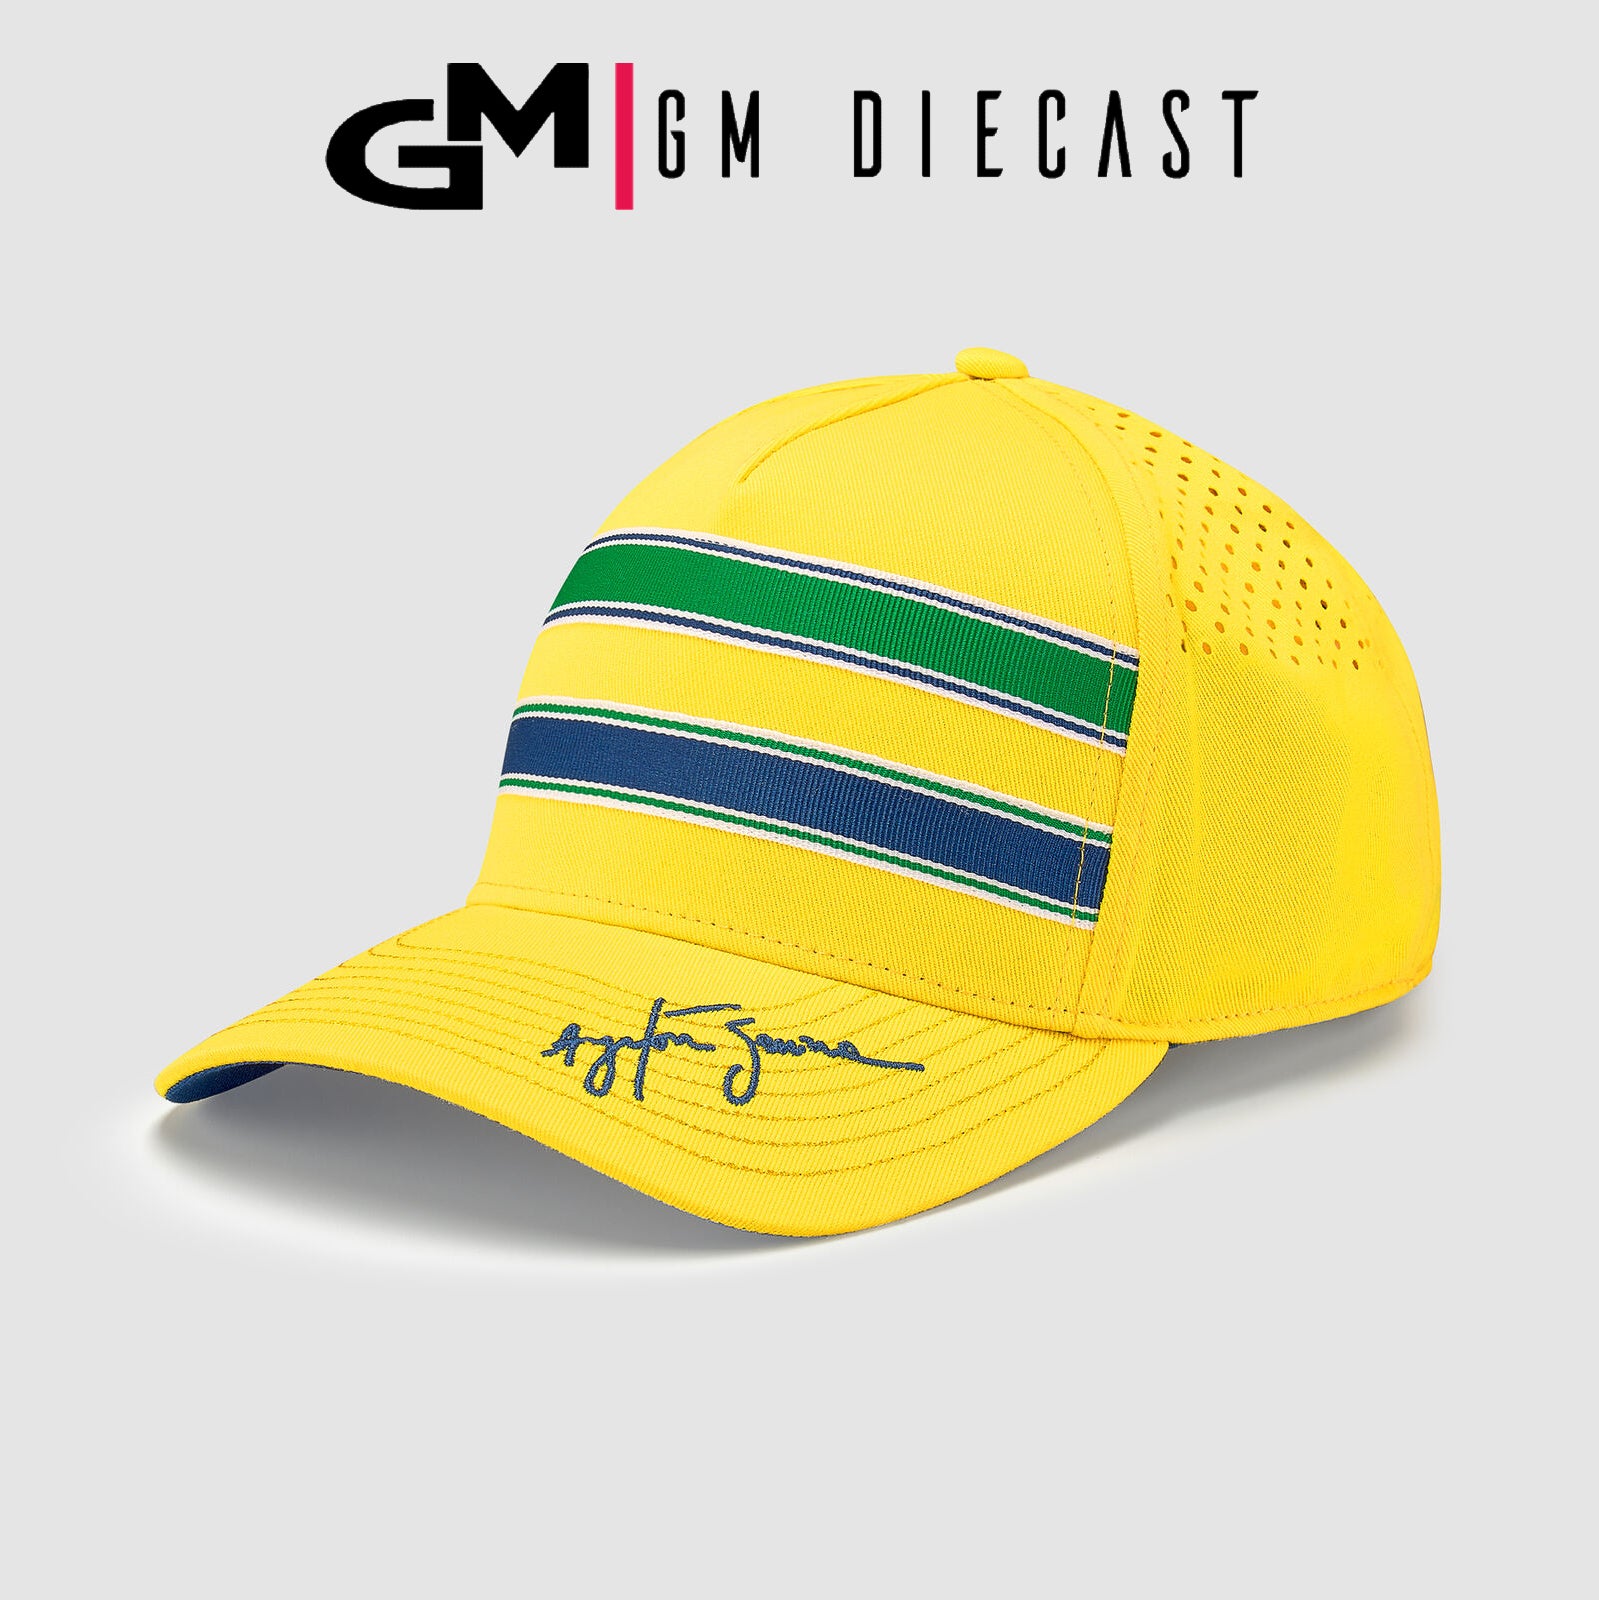 A.Senna Official Cap